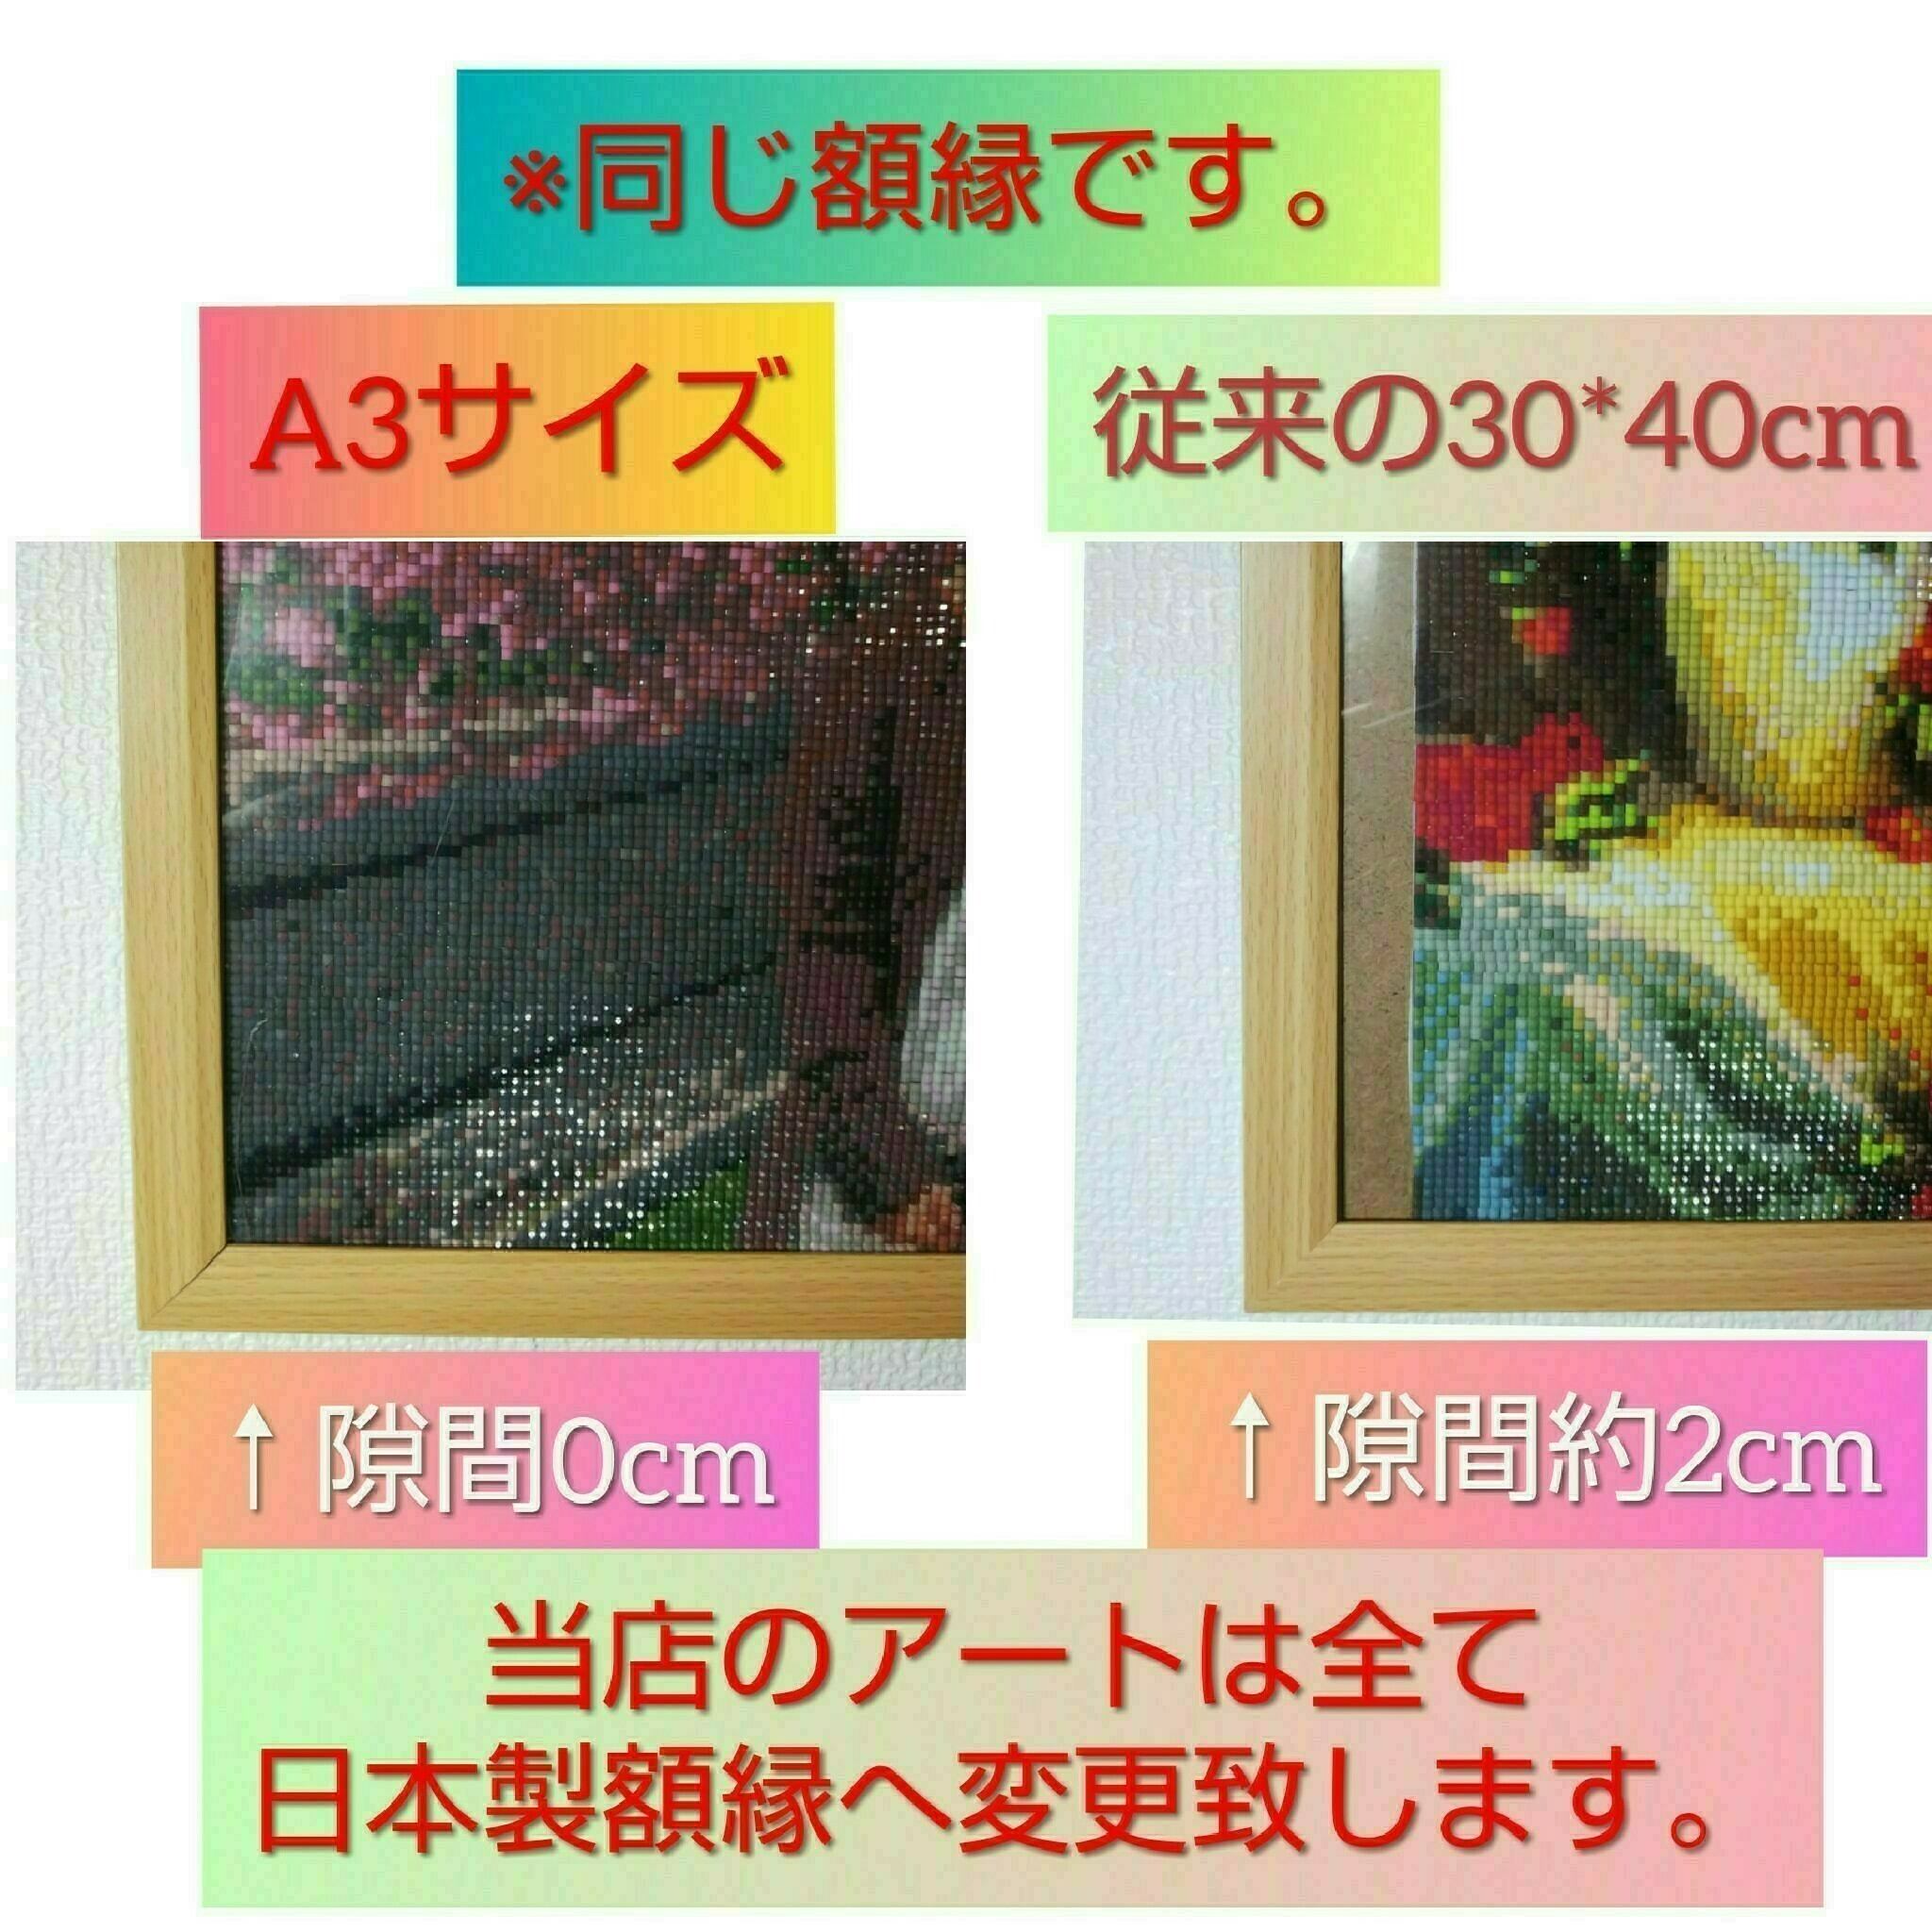 A3サイズ 四角ビーズ【kuro-063】ダイヤモンドアート